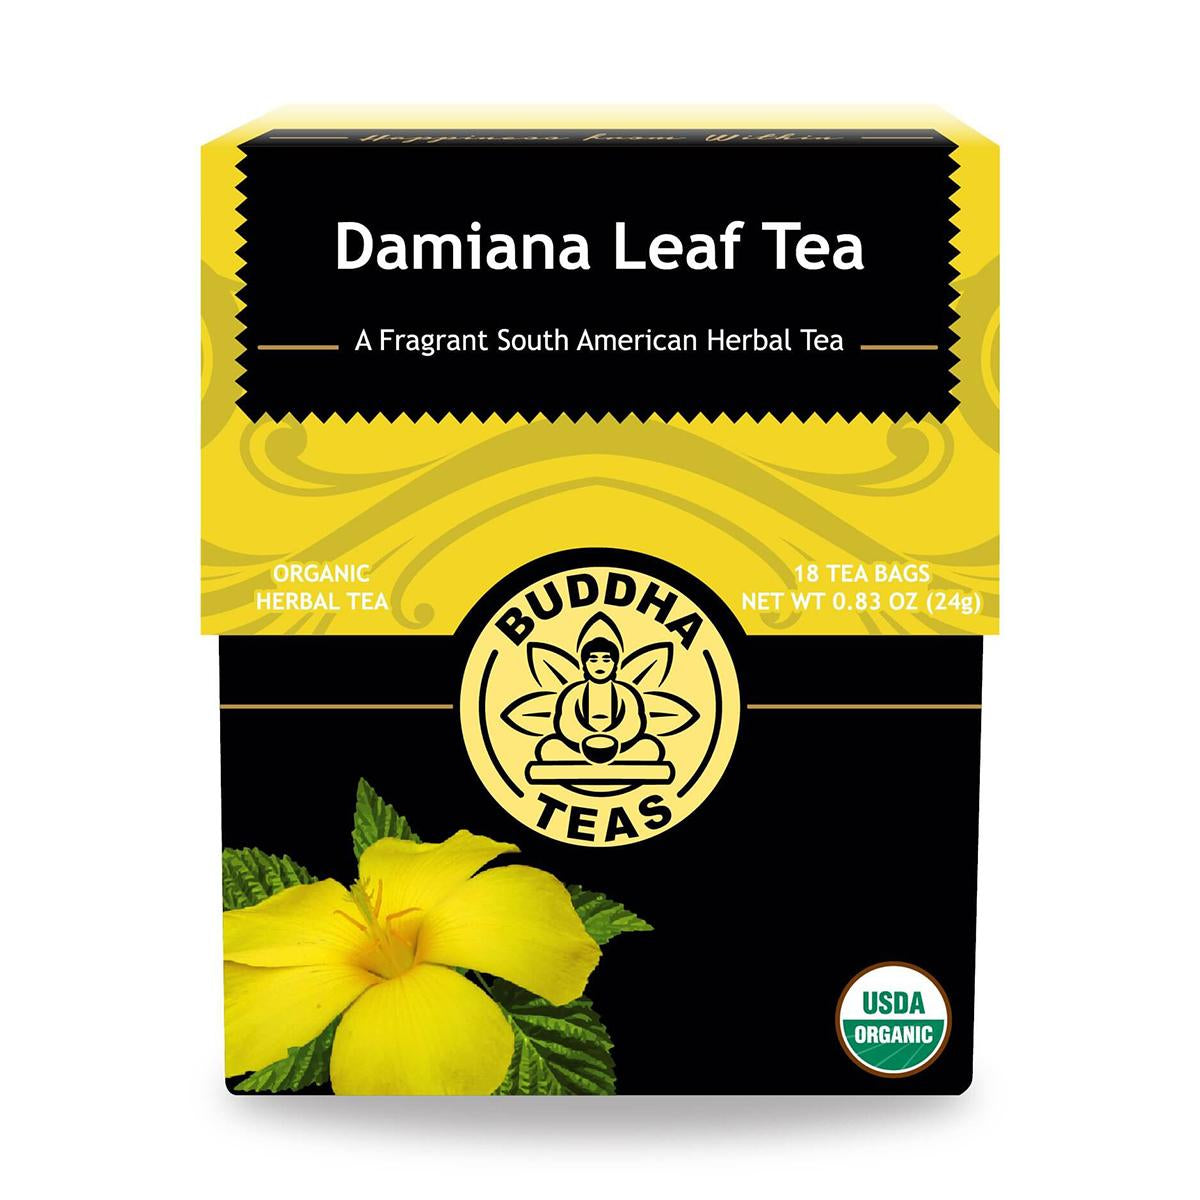 Primary image of Organic Damiana Leaf Tea